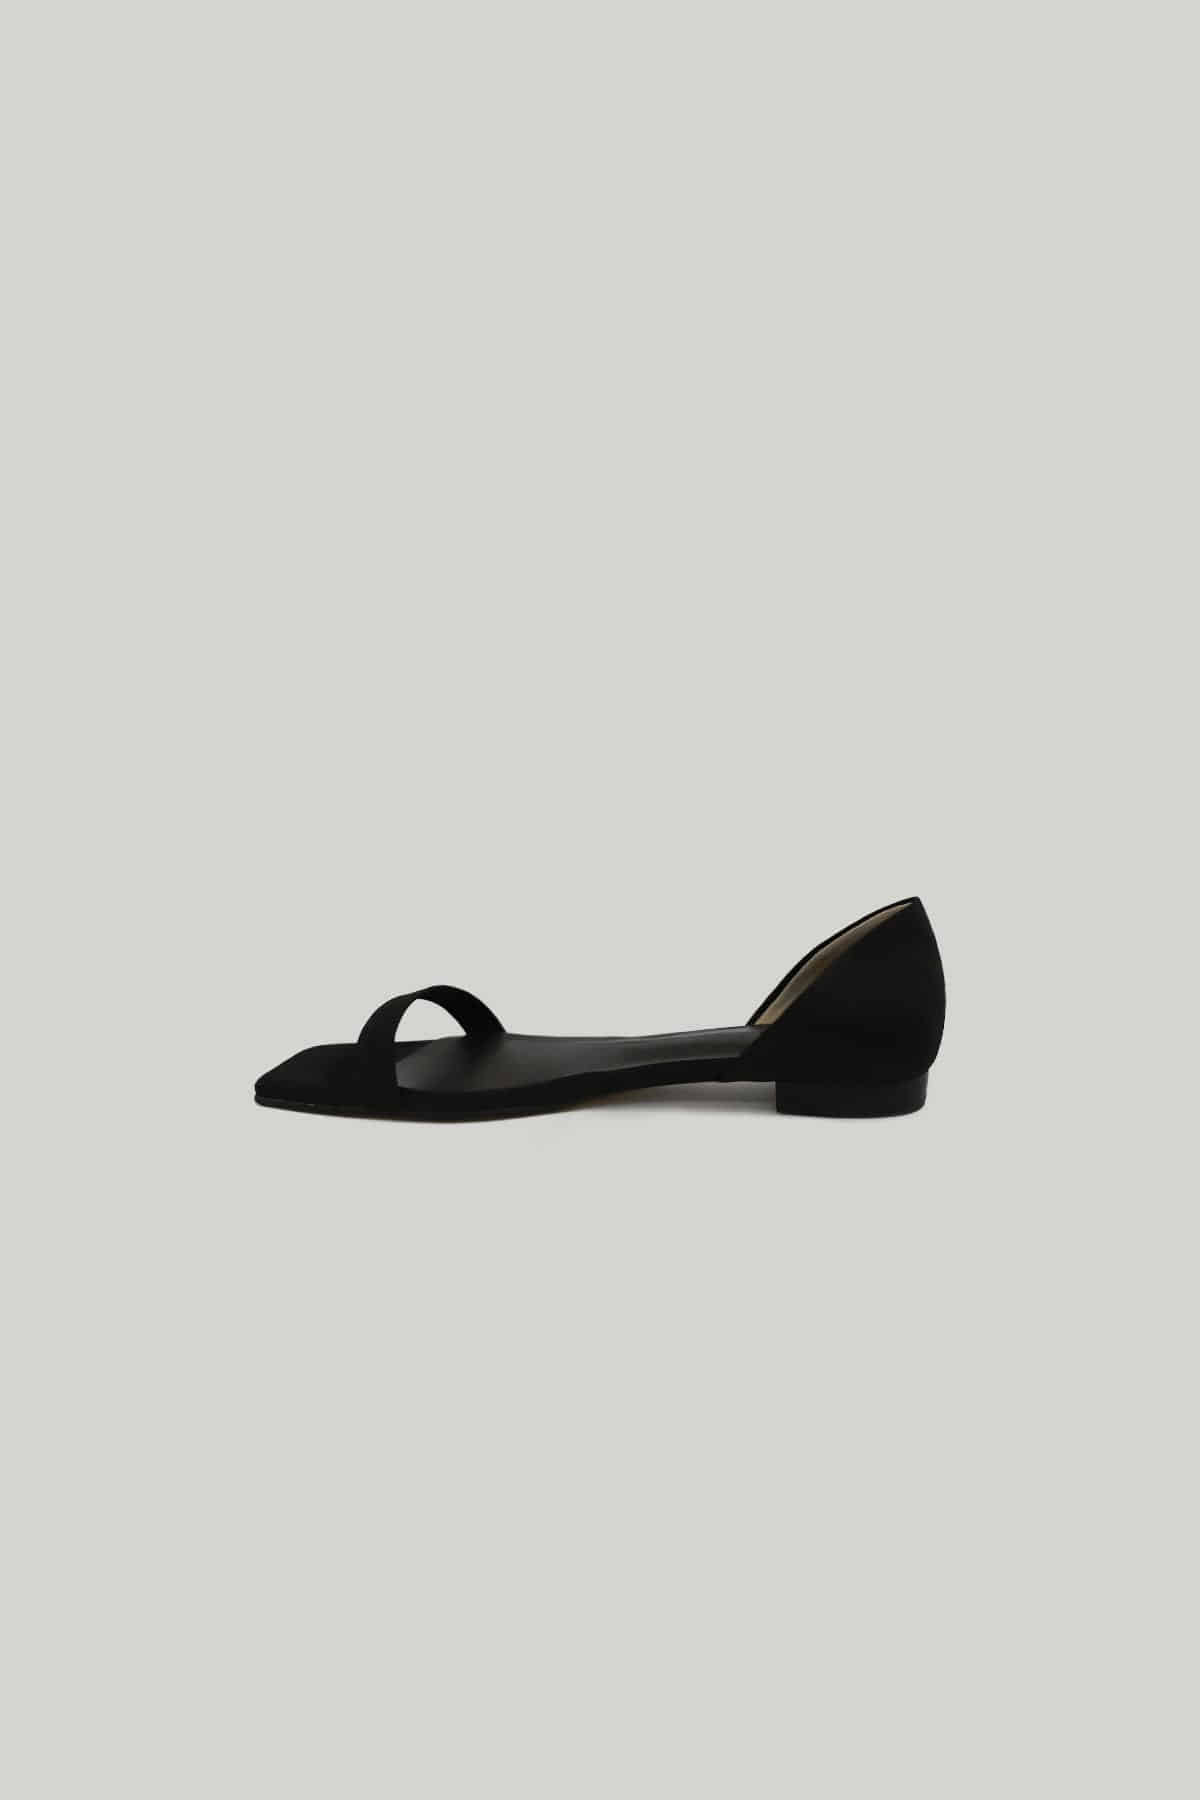 Aurora Satin Flat Sandals (Black)